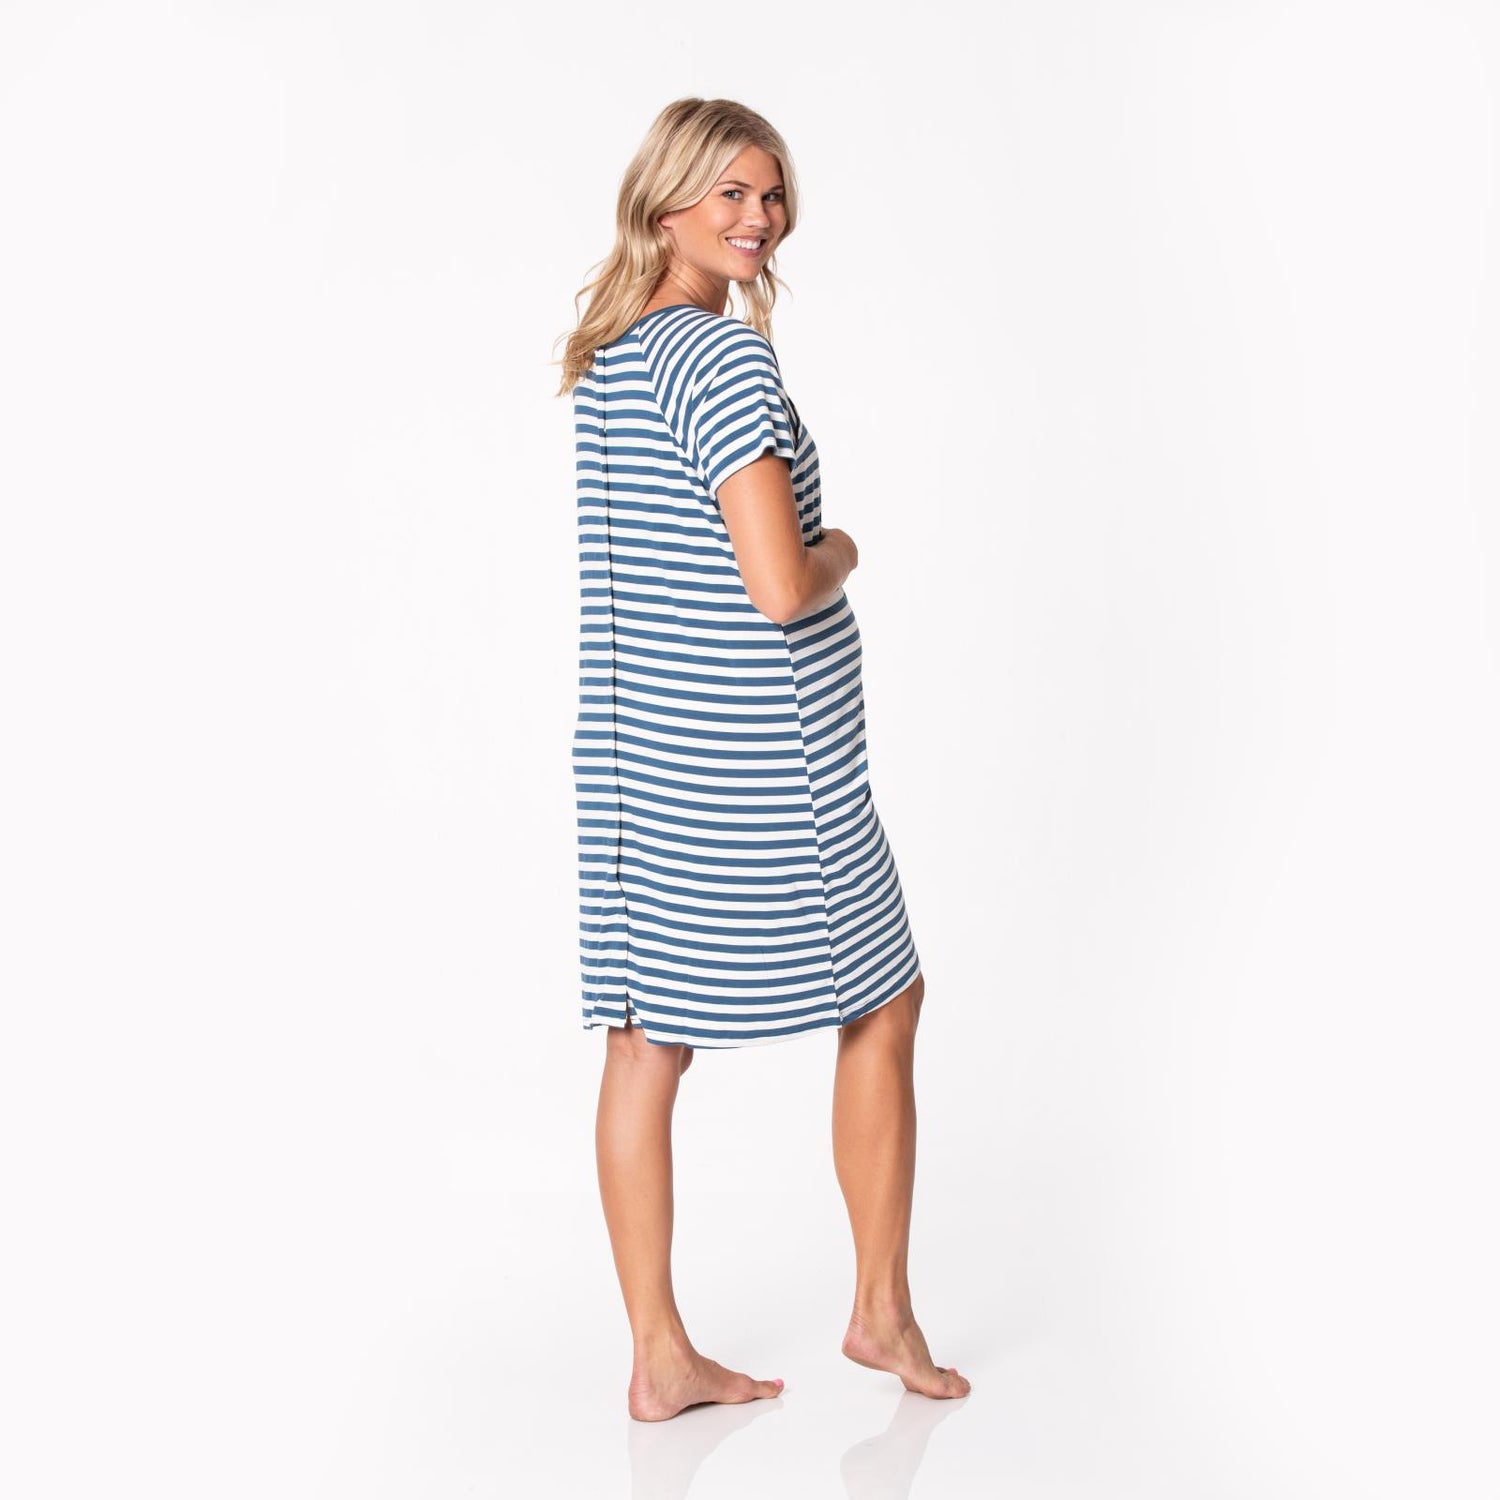 Women's Print Hospital Gown in Nautical Stripe